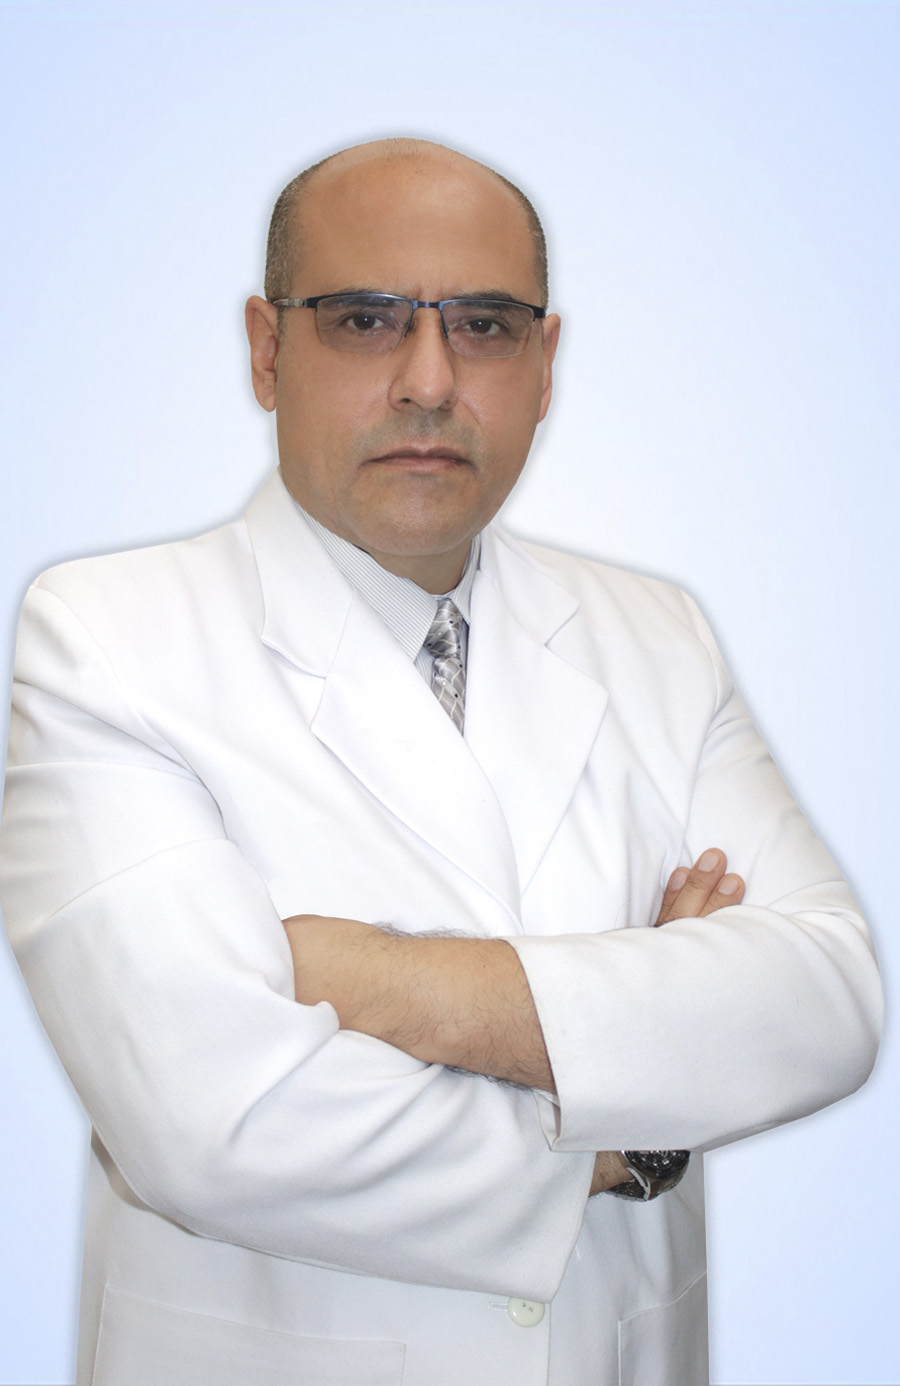 DR. DORREGARAY